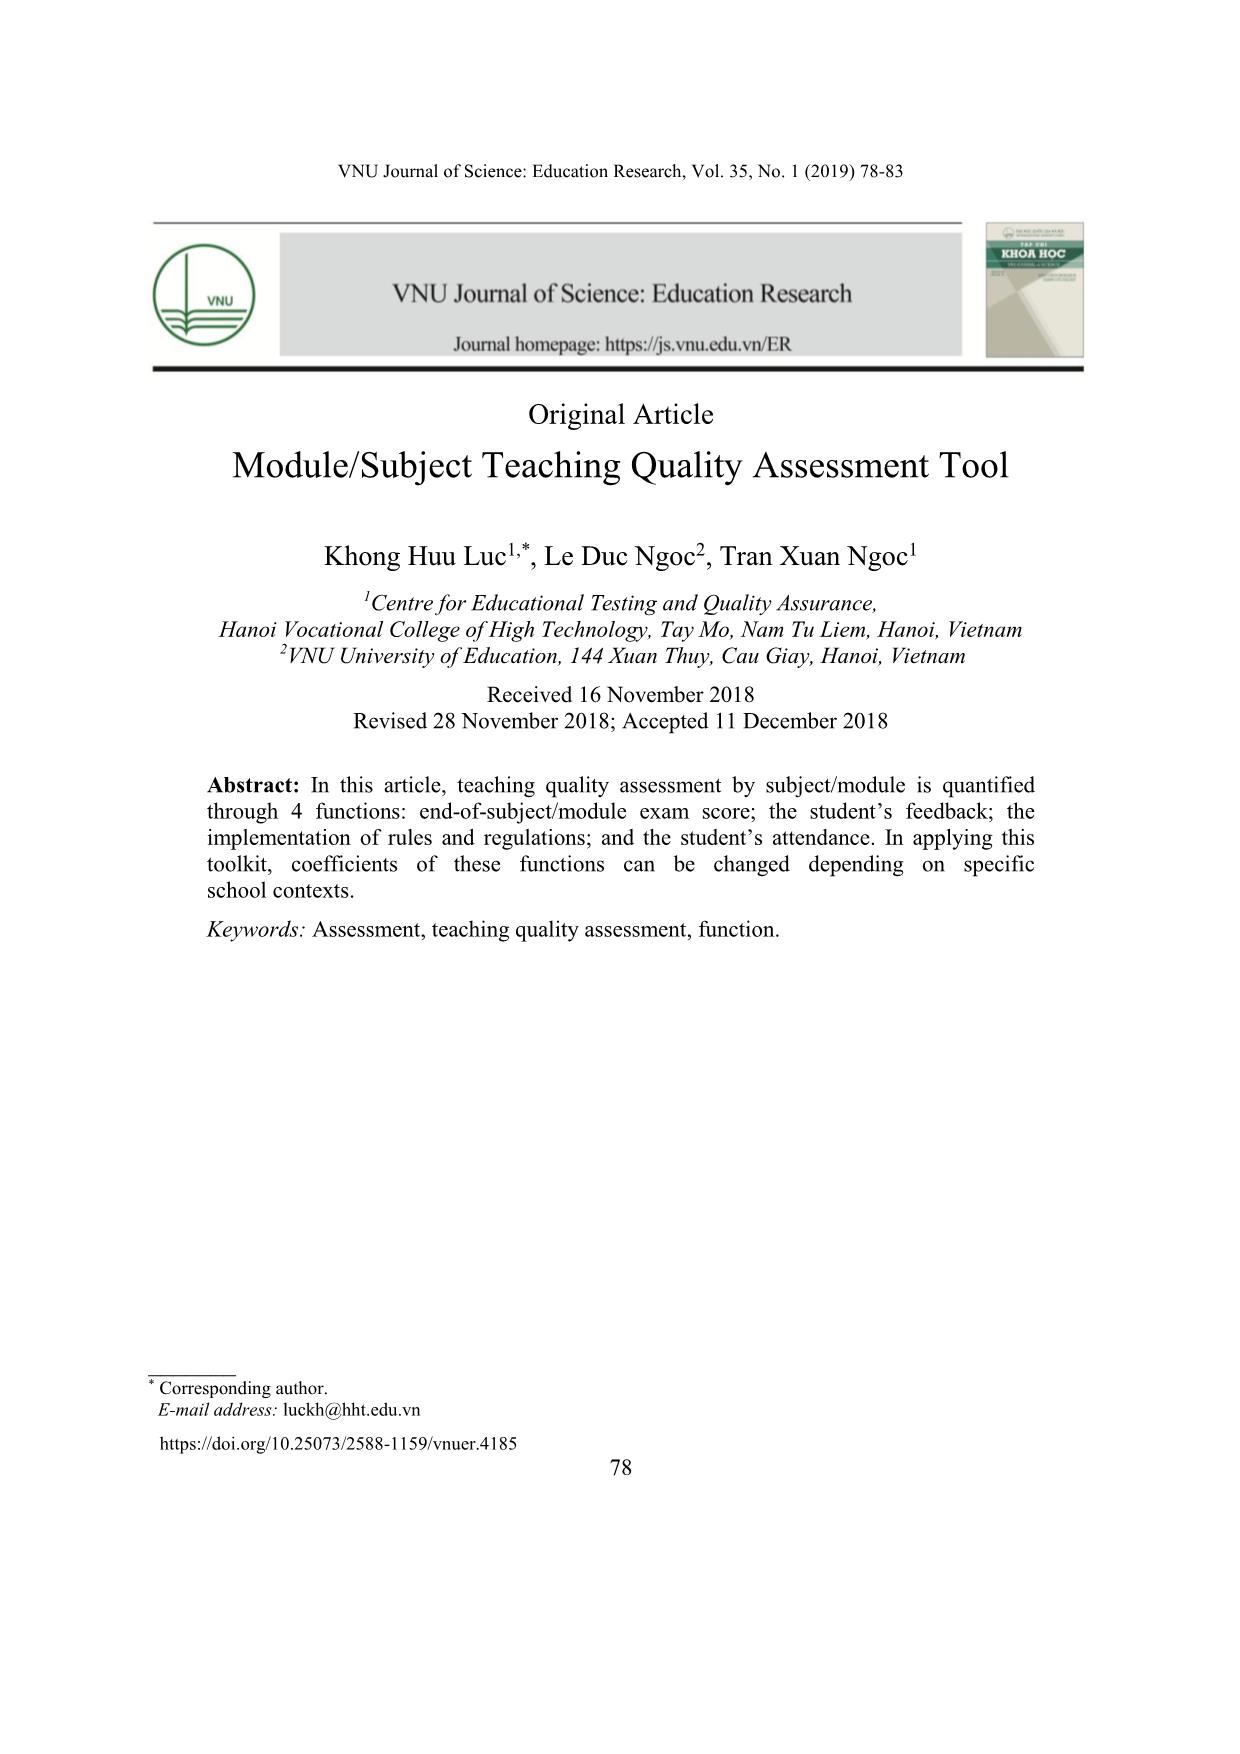 Module/subject teaching quality assessment tool trang 1